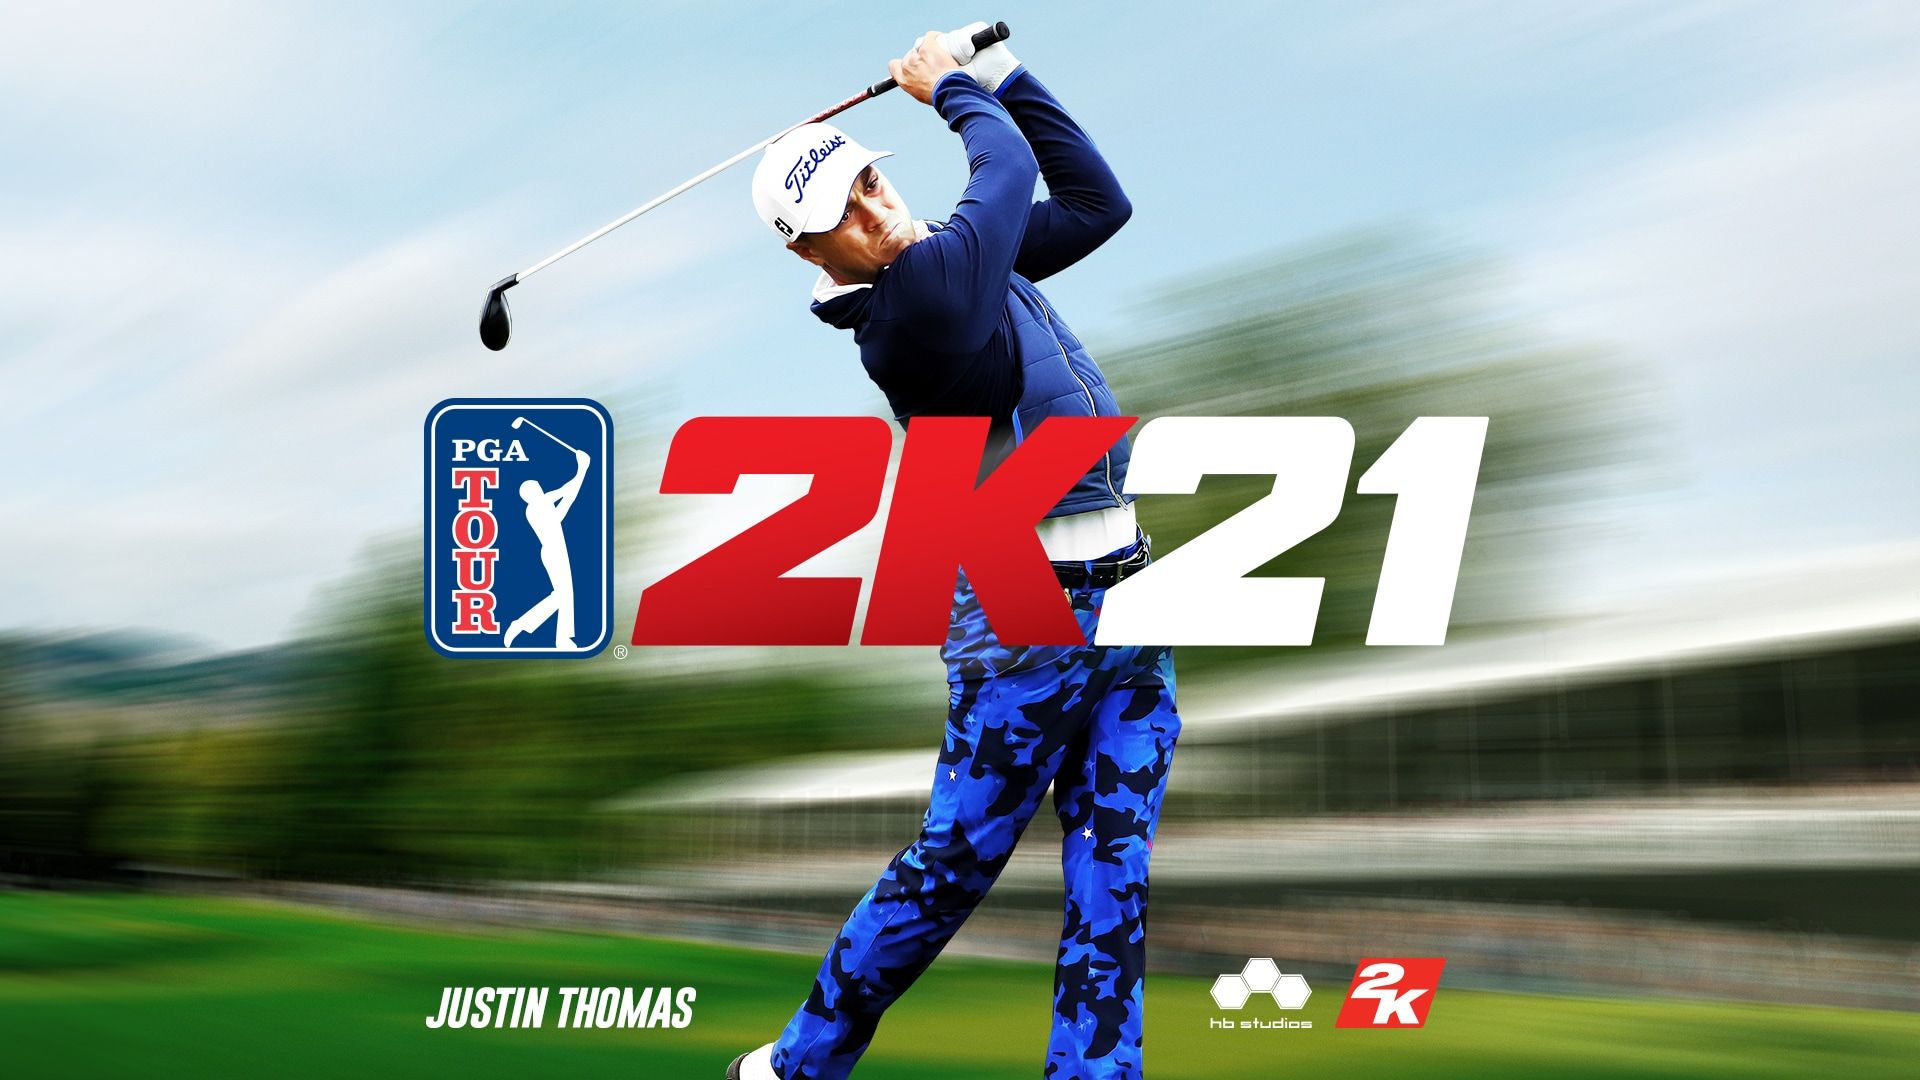 Justin Thomas revealed as cover athlete for PGA Tour 2K21 video